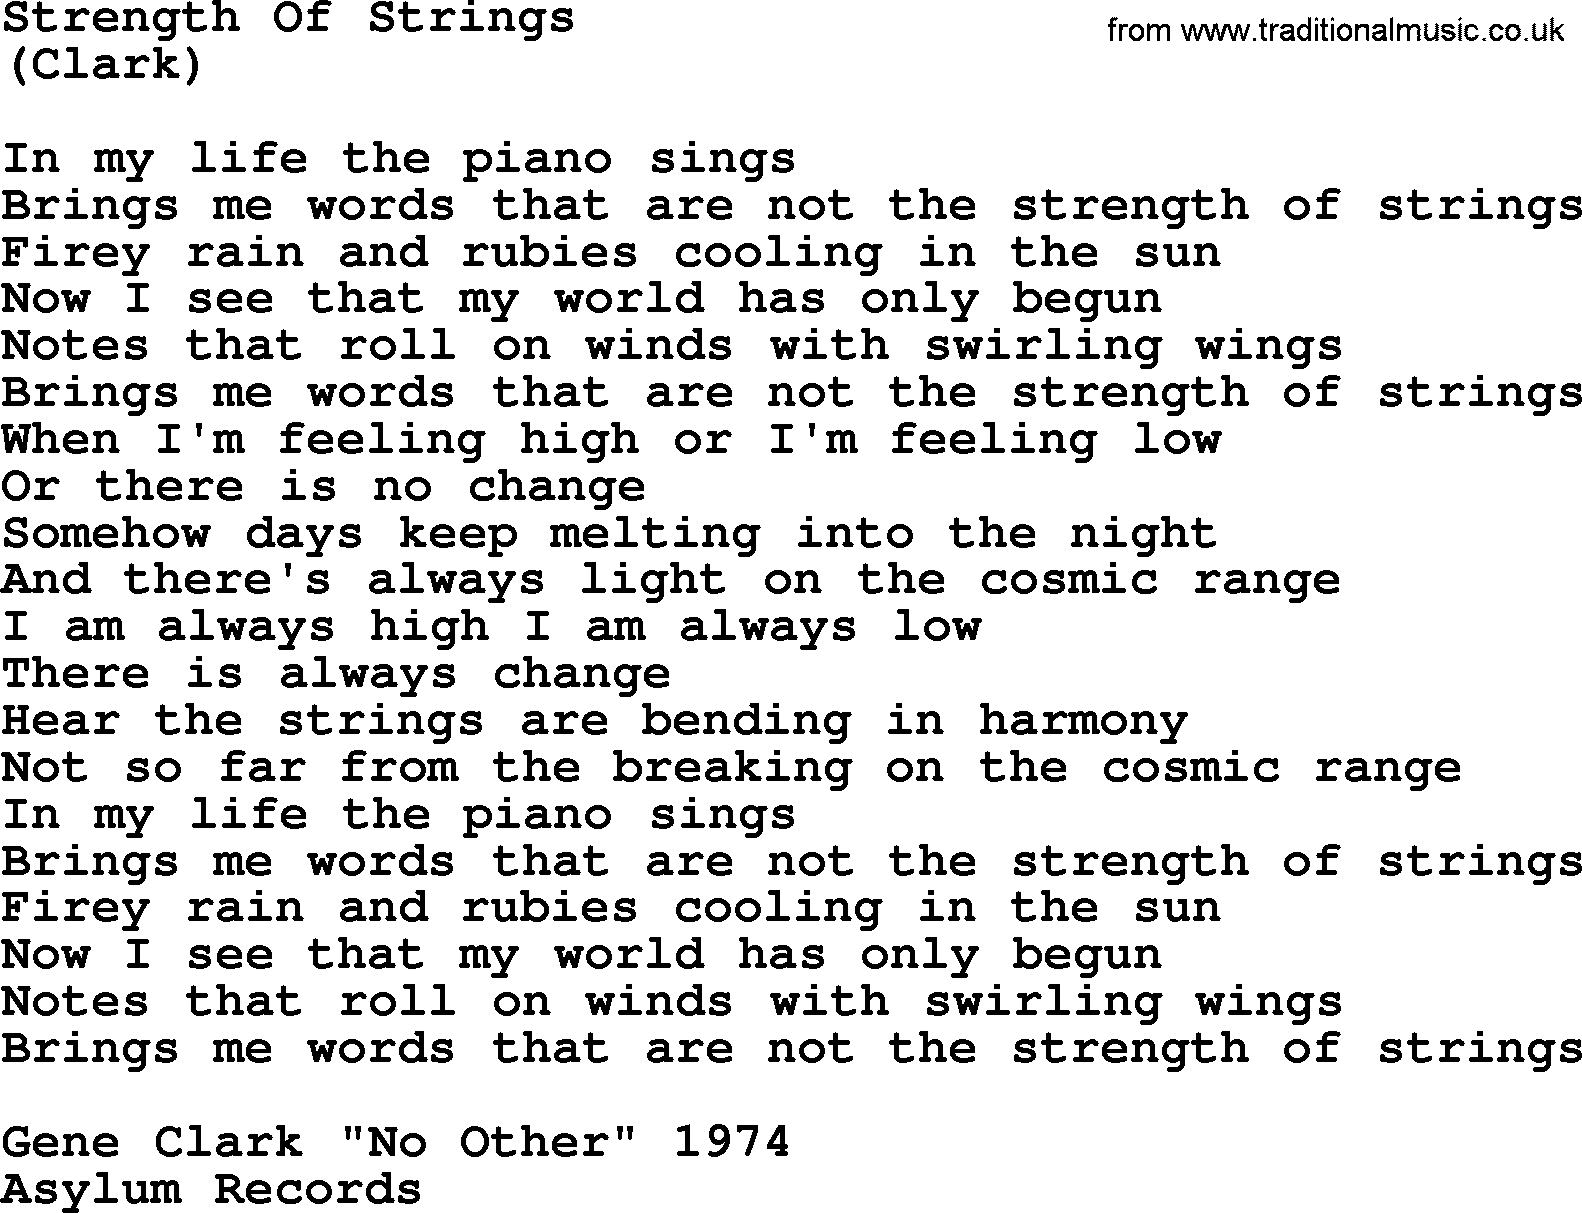 The Byrds song Strength Of Strings, lyrics